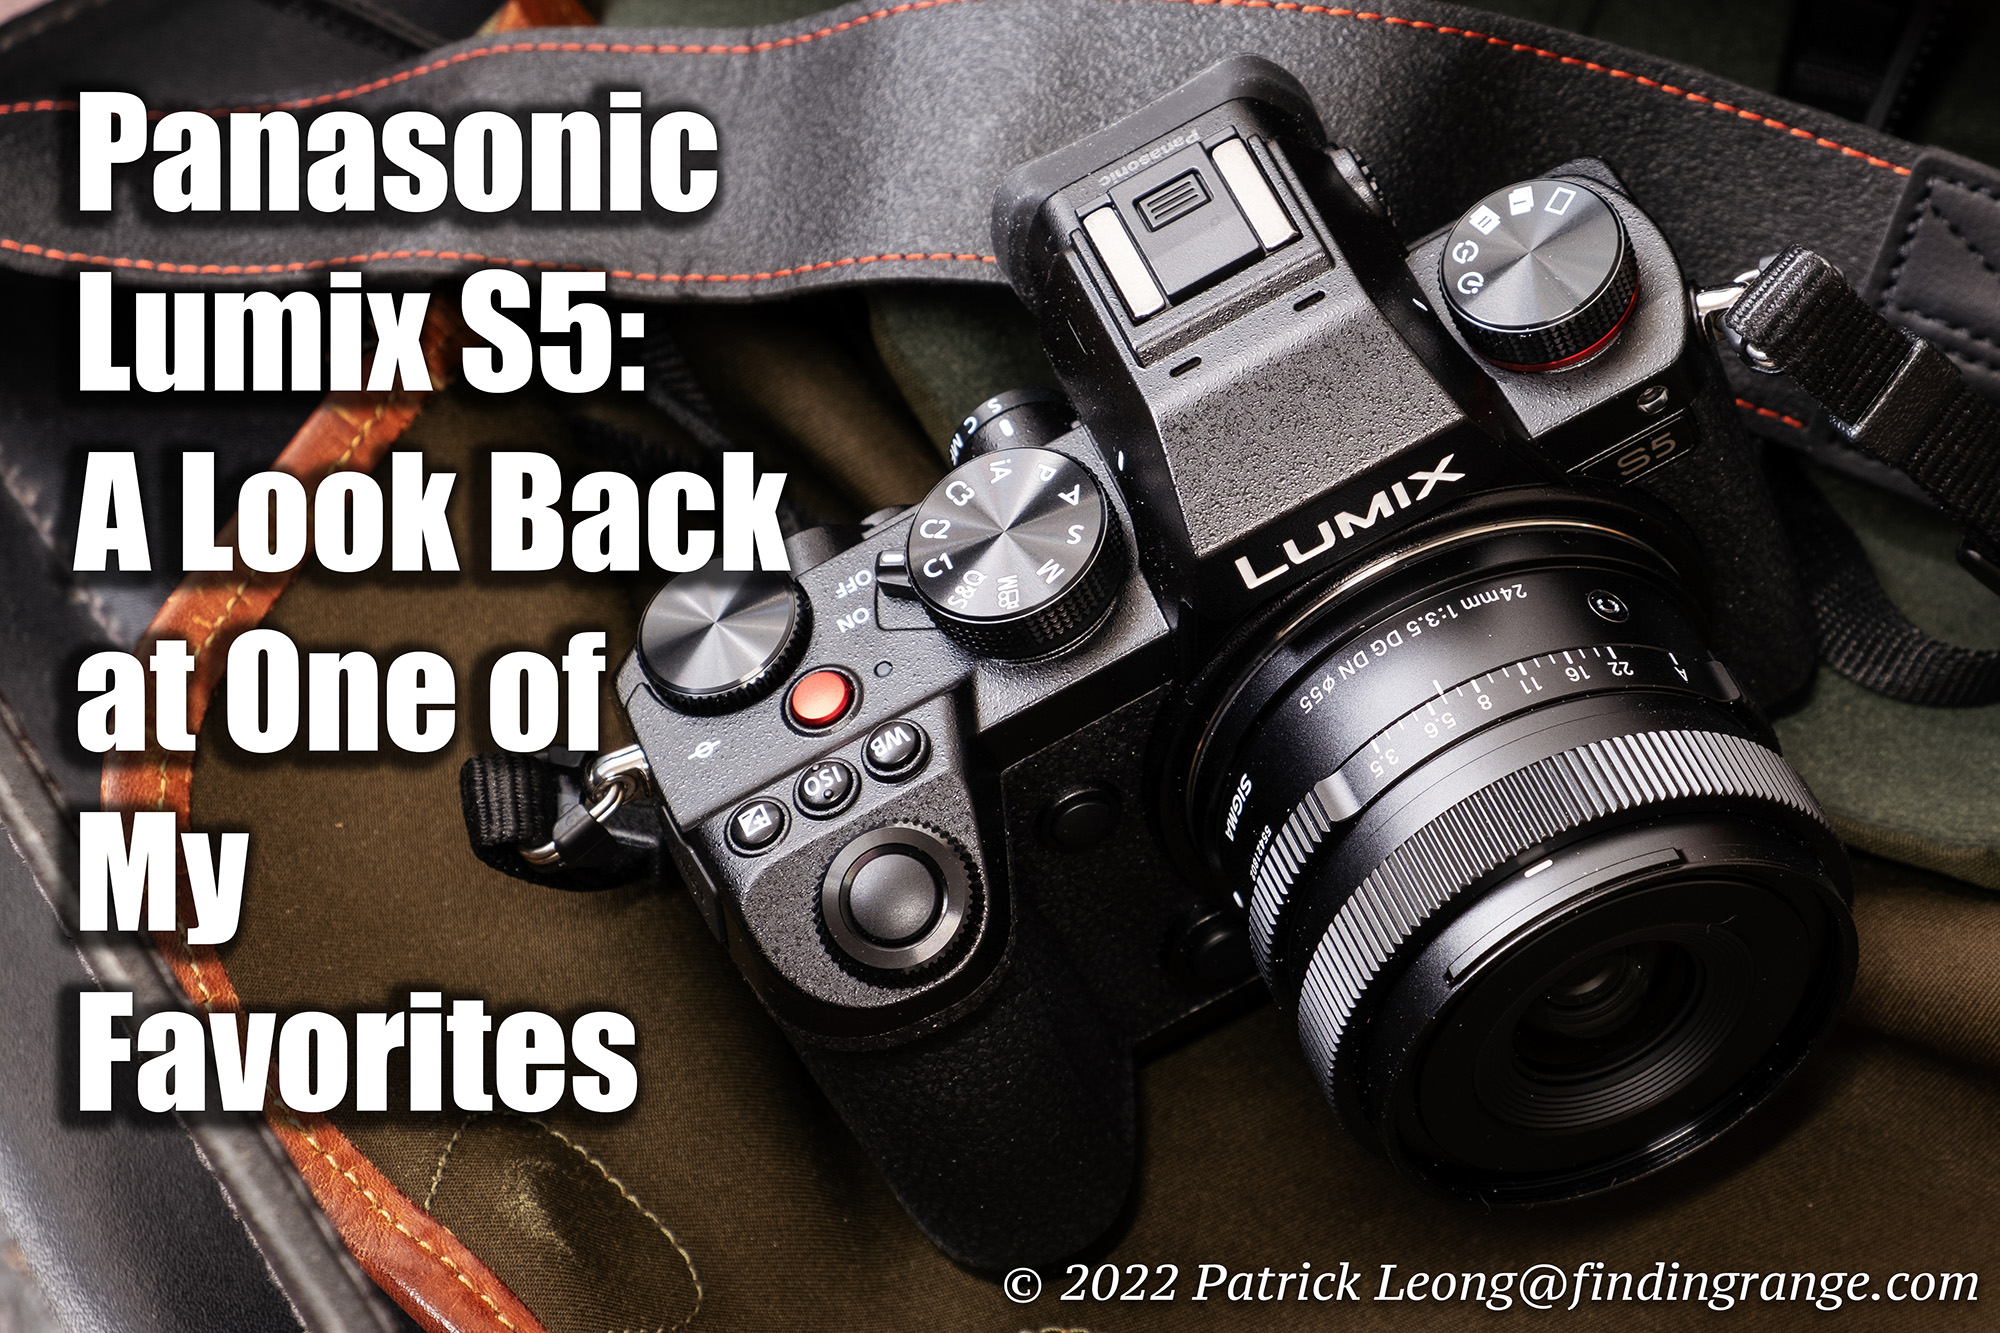 zo Rijden gloeilamp Panasonic Lumix S5: A Look Back at One of My Favorites - Finding Range